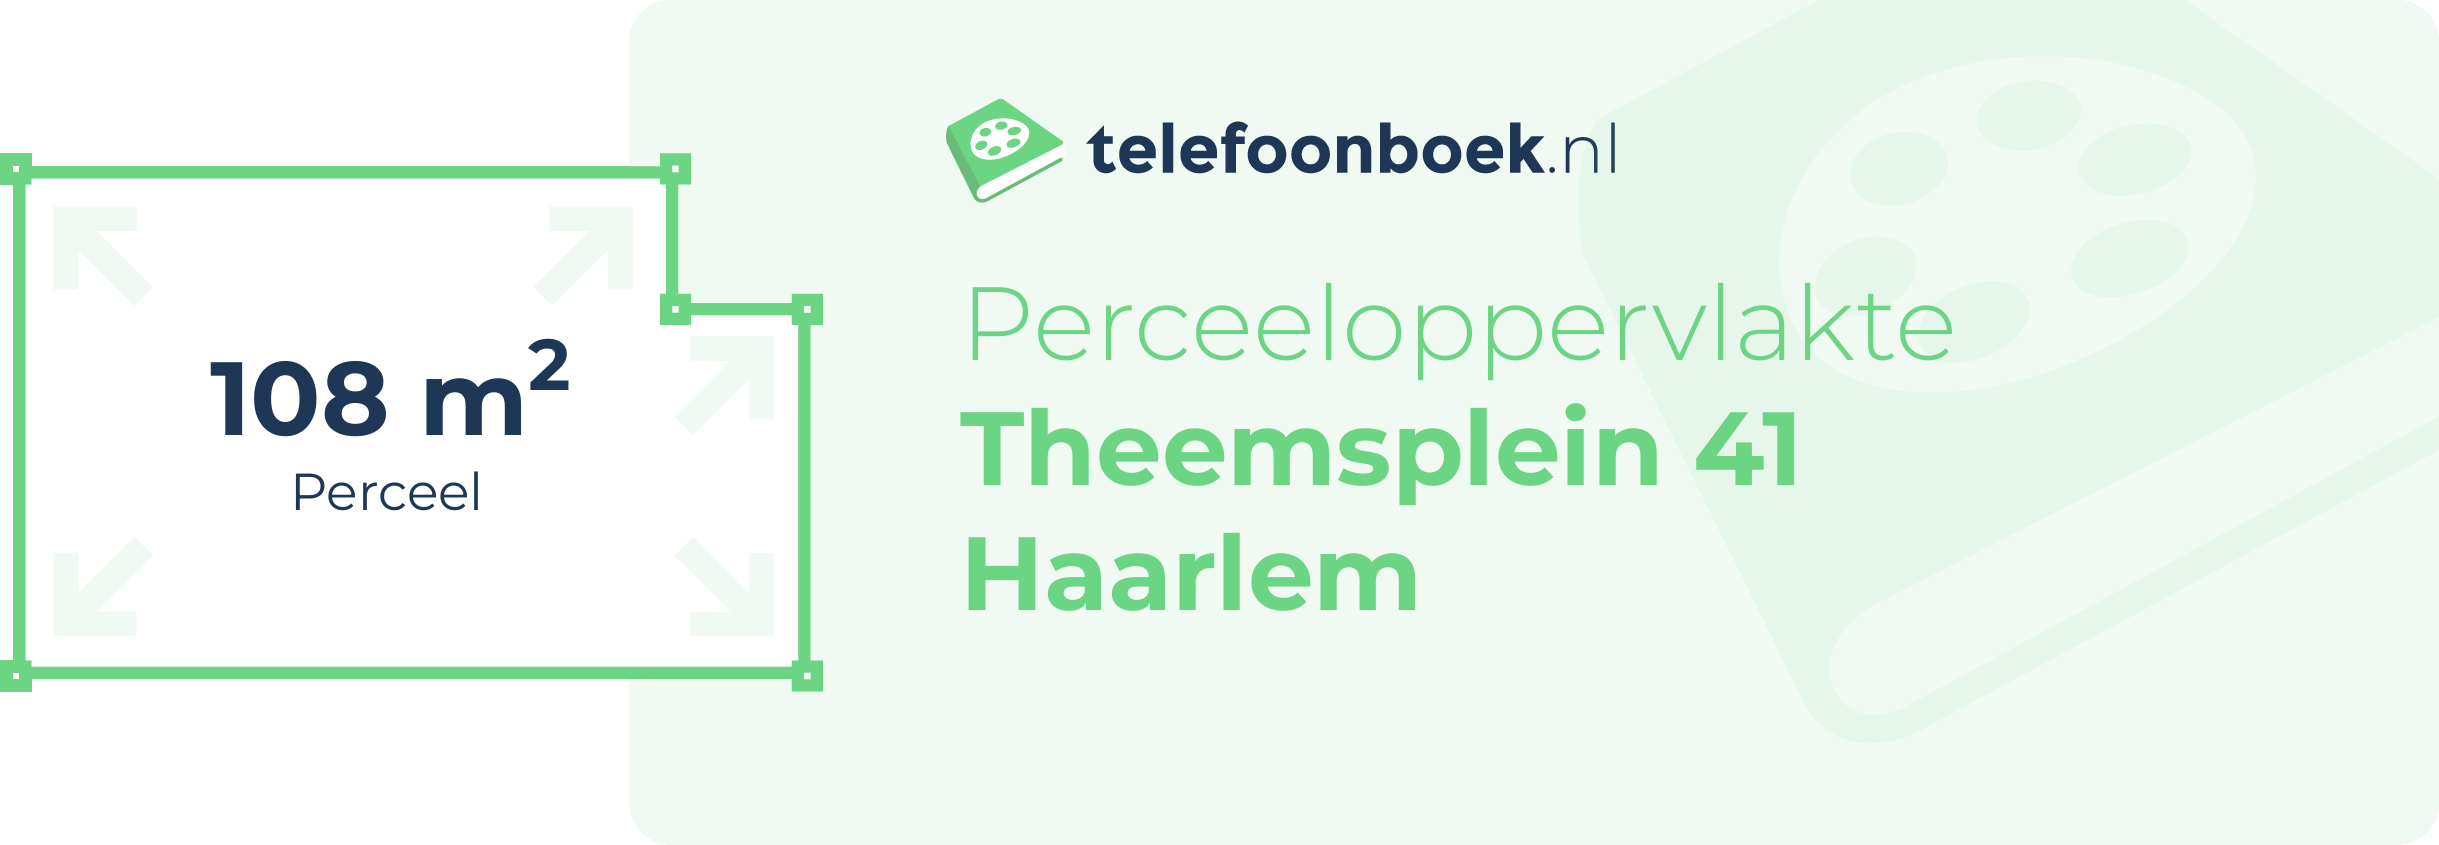 Perceeloppervlakte Theemsplein 41 Haarlem